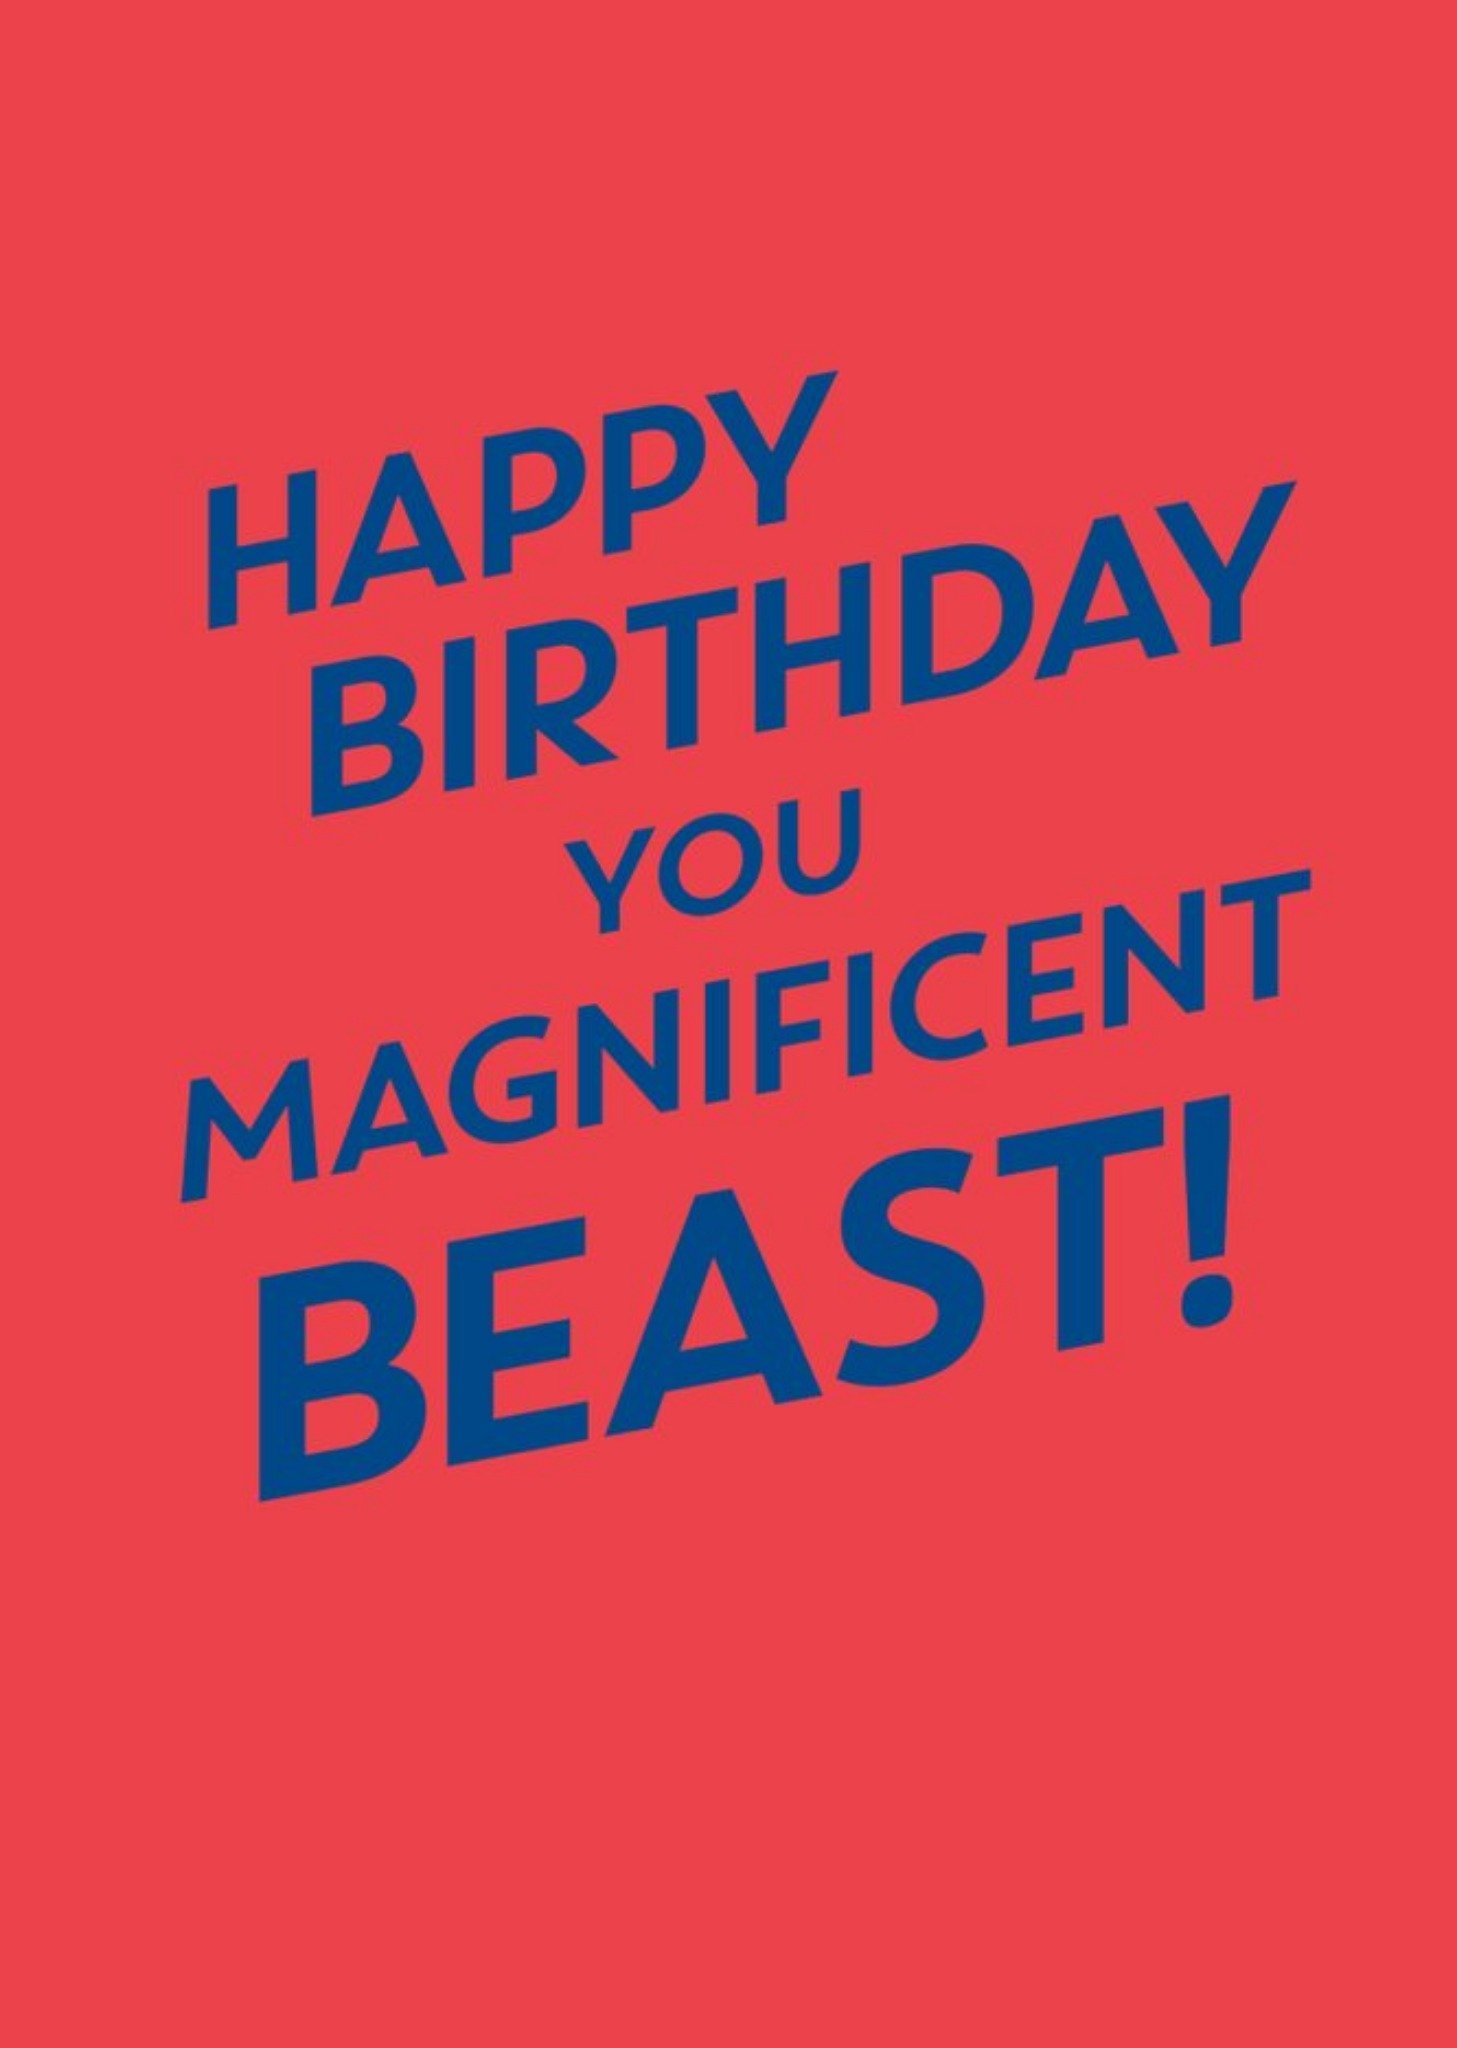 Moonpig Magnigicent Beast Birthday Card Ecard